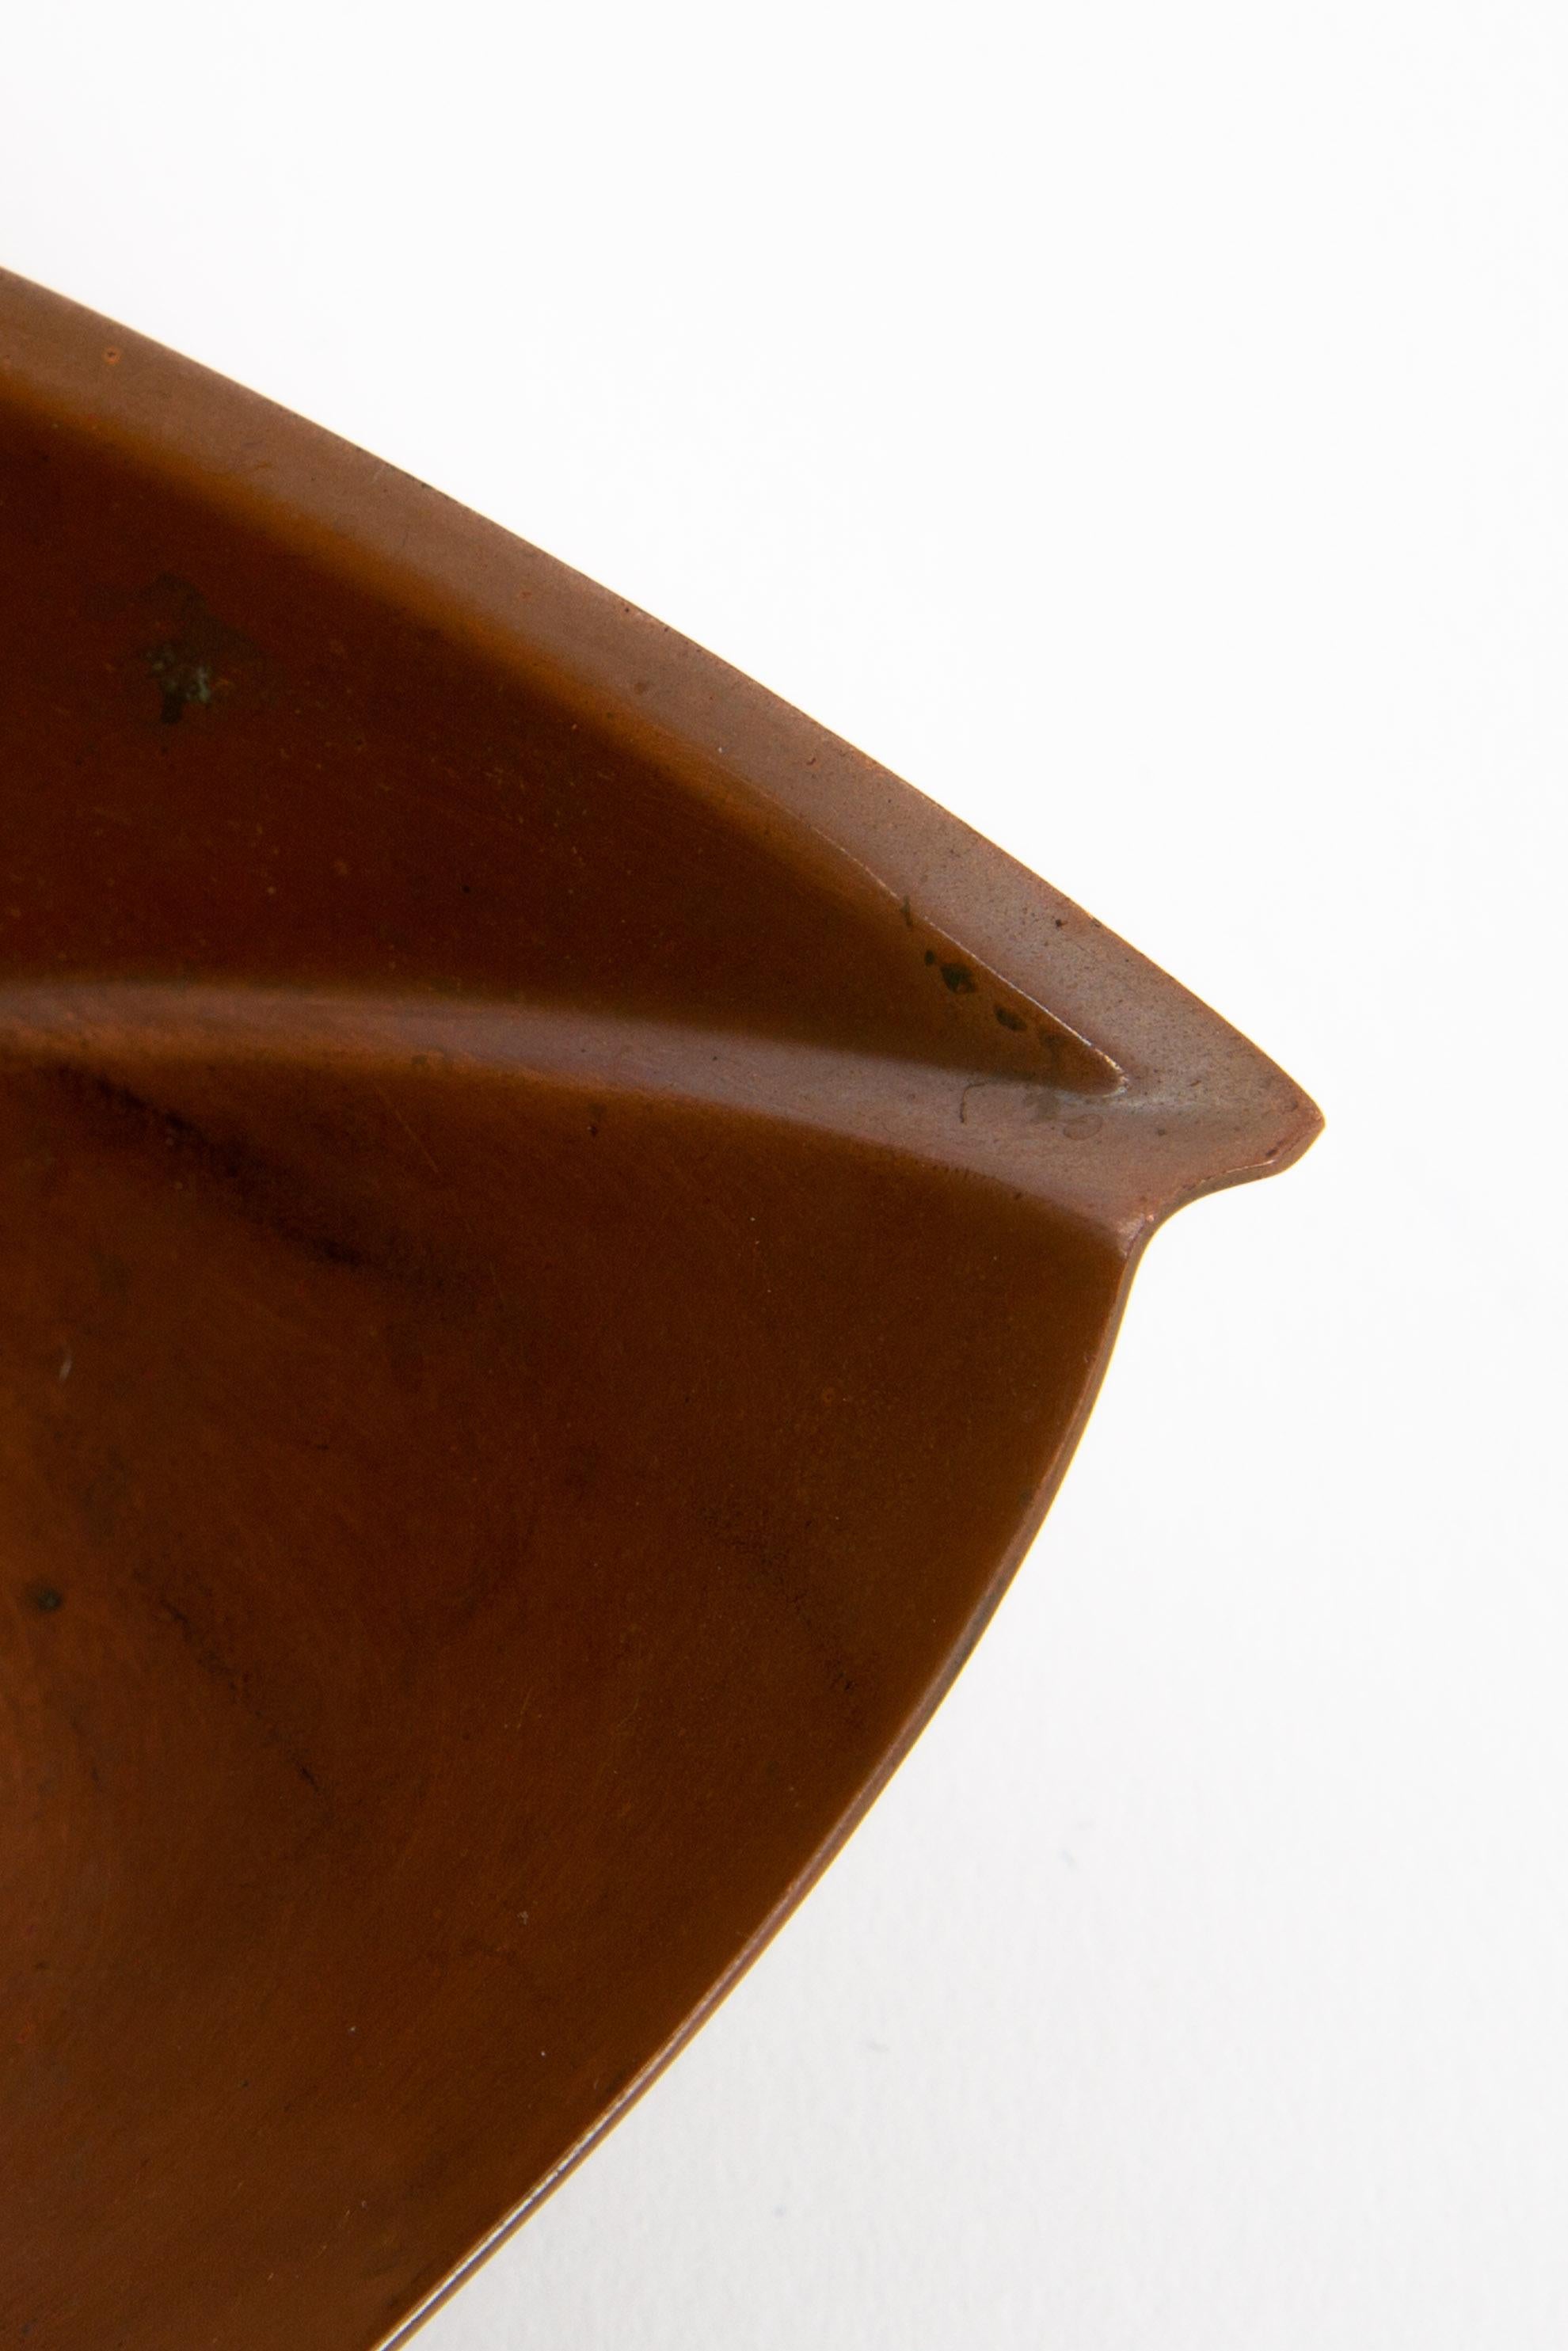 Mid-20th Century Tapio Wirkkala Bronze Bowl Organic Form by Kultakeskus Oy Finland For Sale